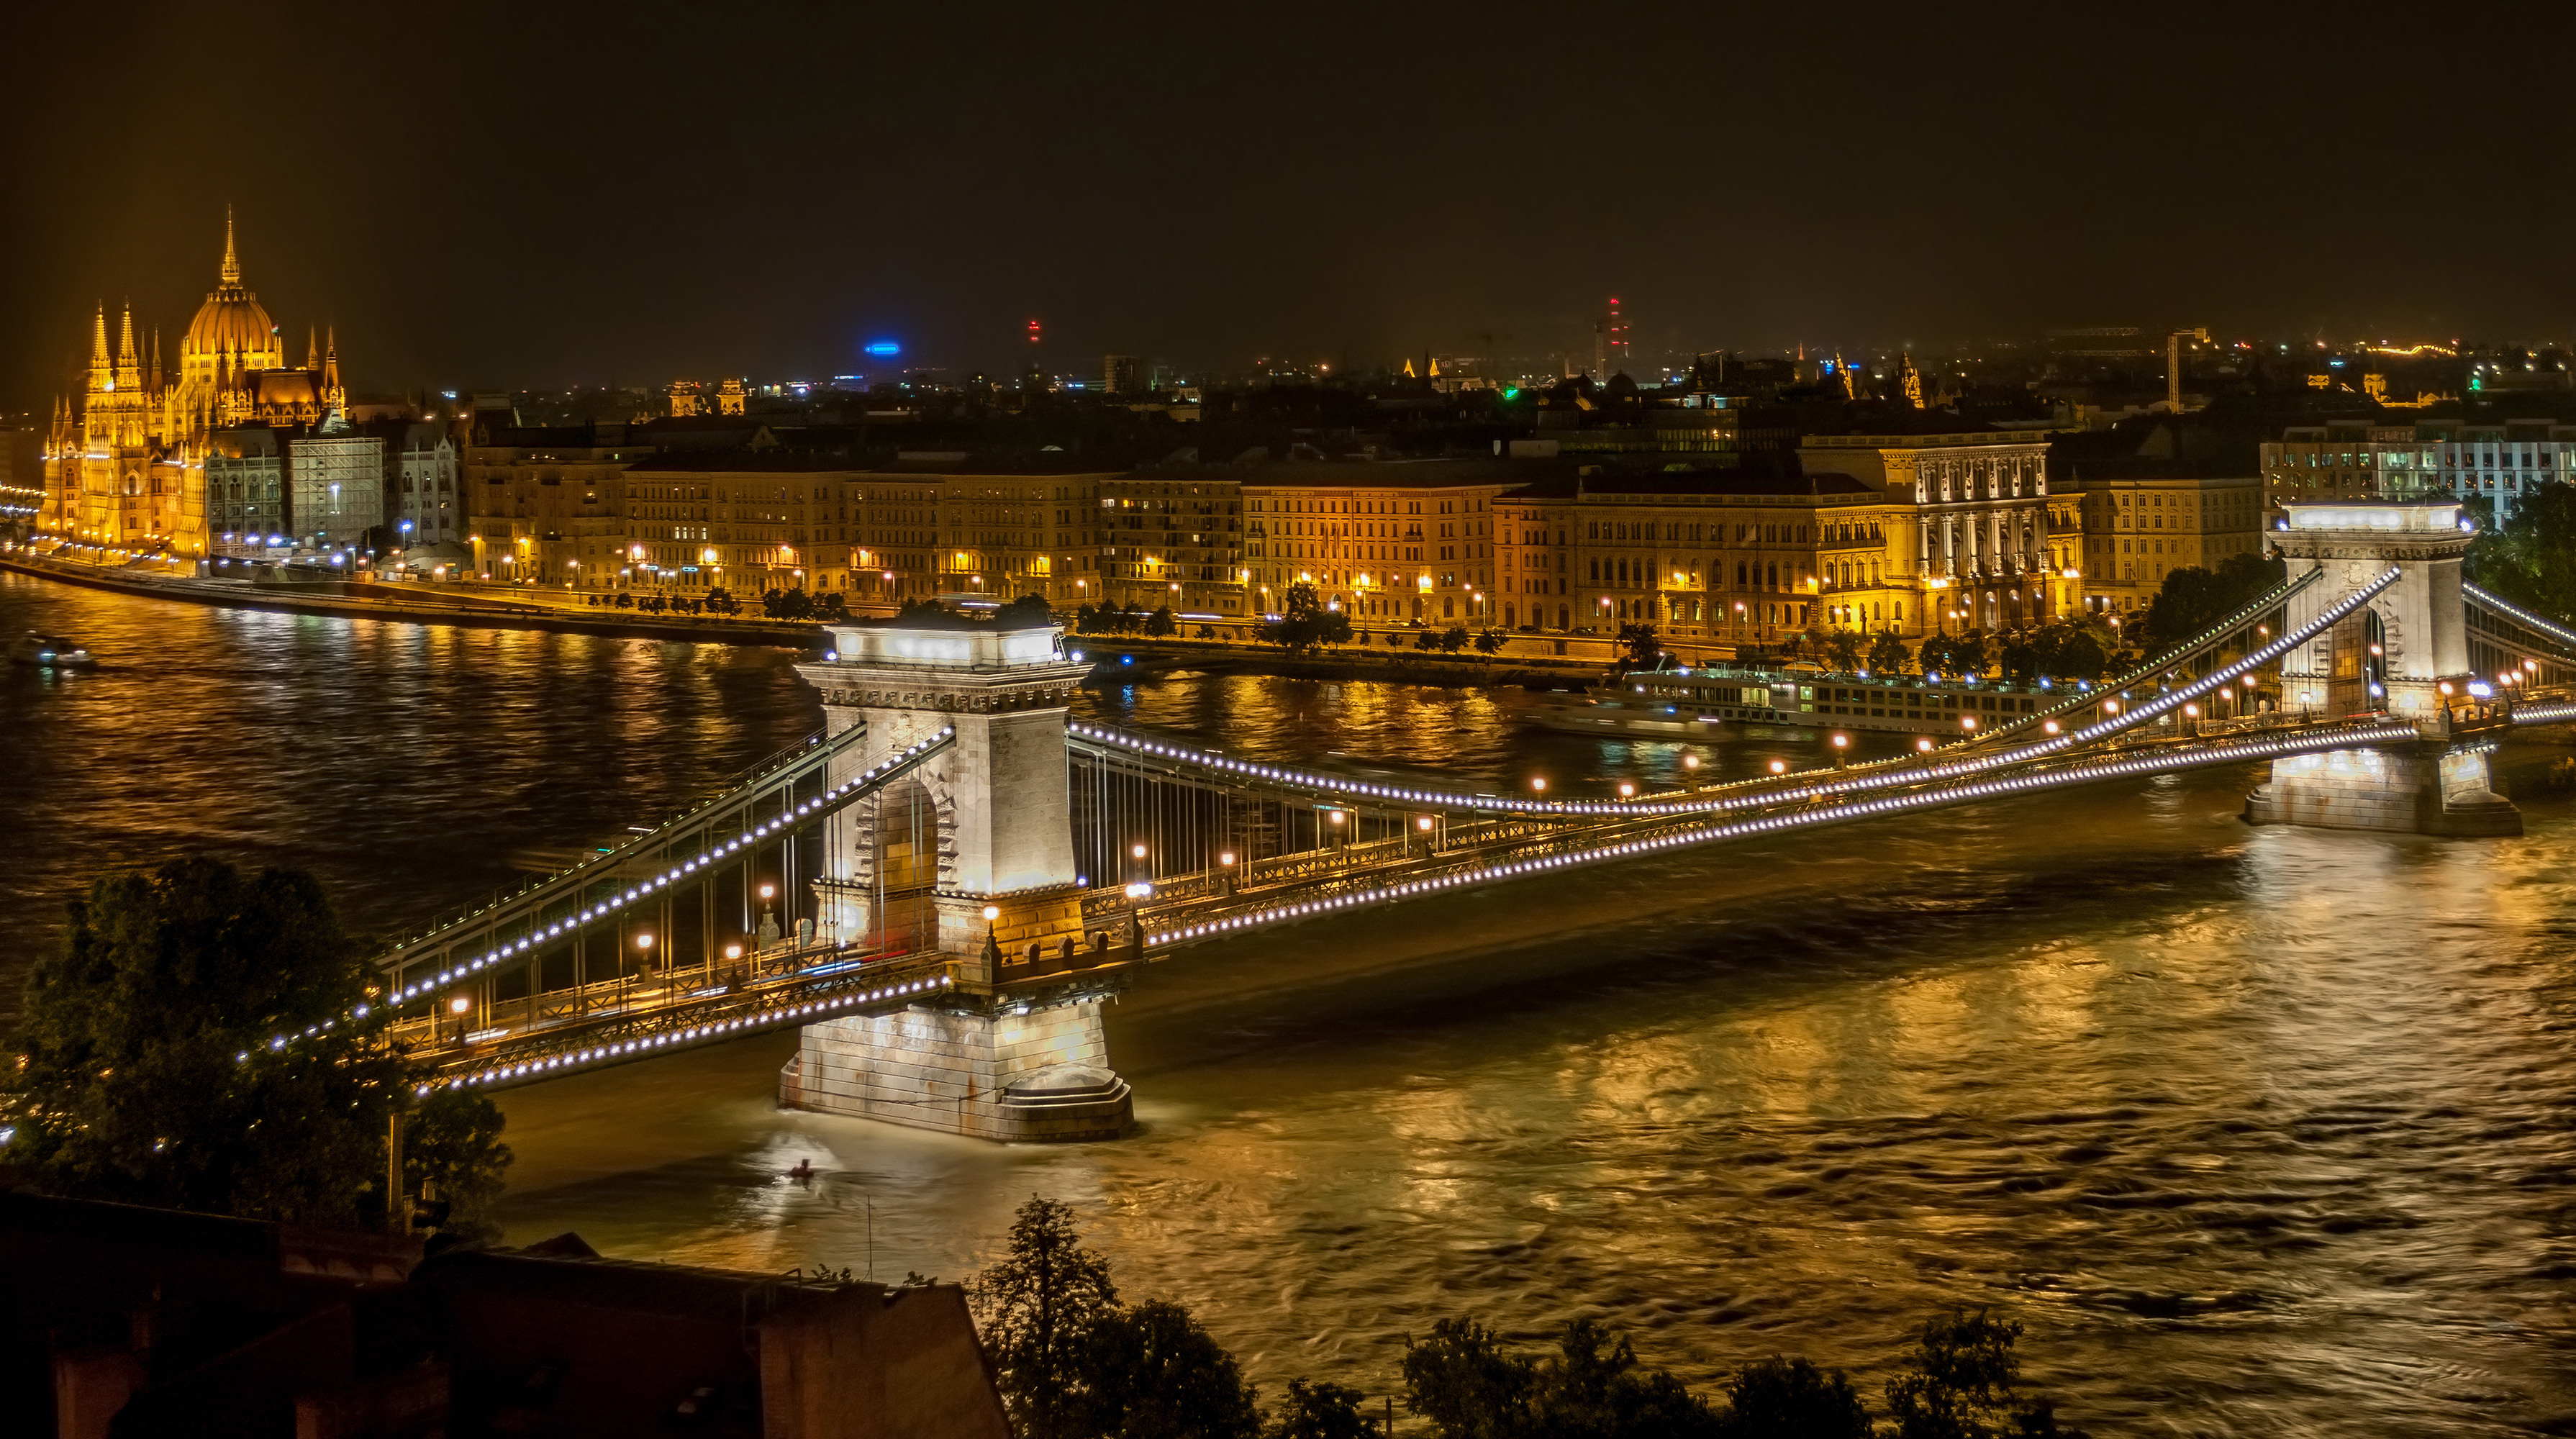 File:Széchenyi Chain Bridge in Budapest at night.jpg - Wikimedia Commons